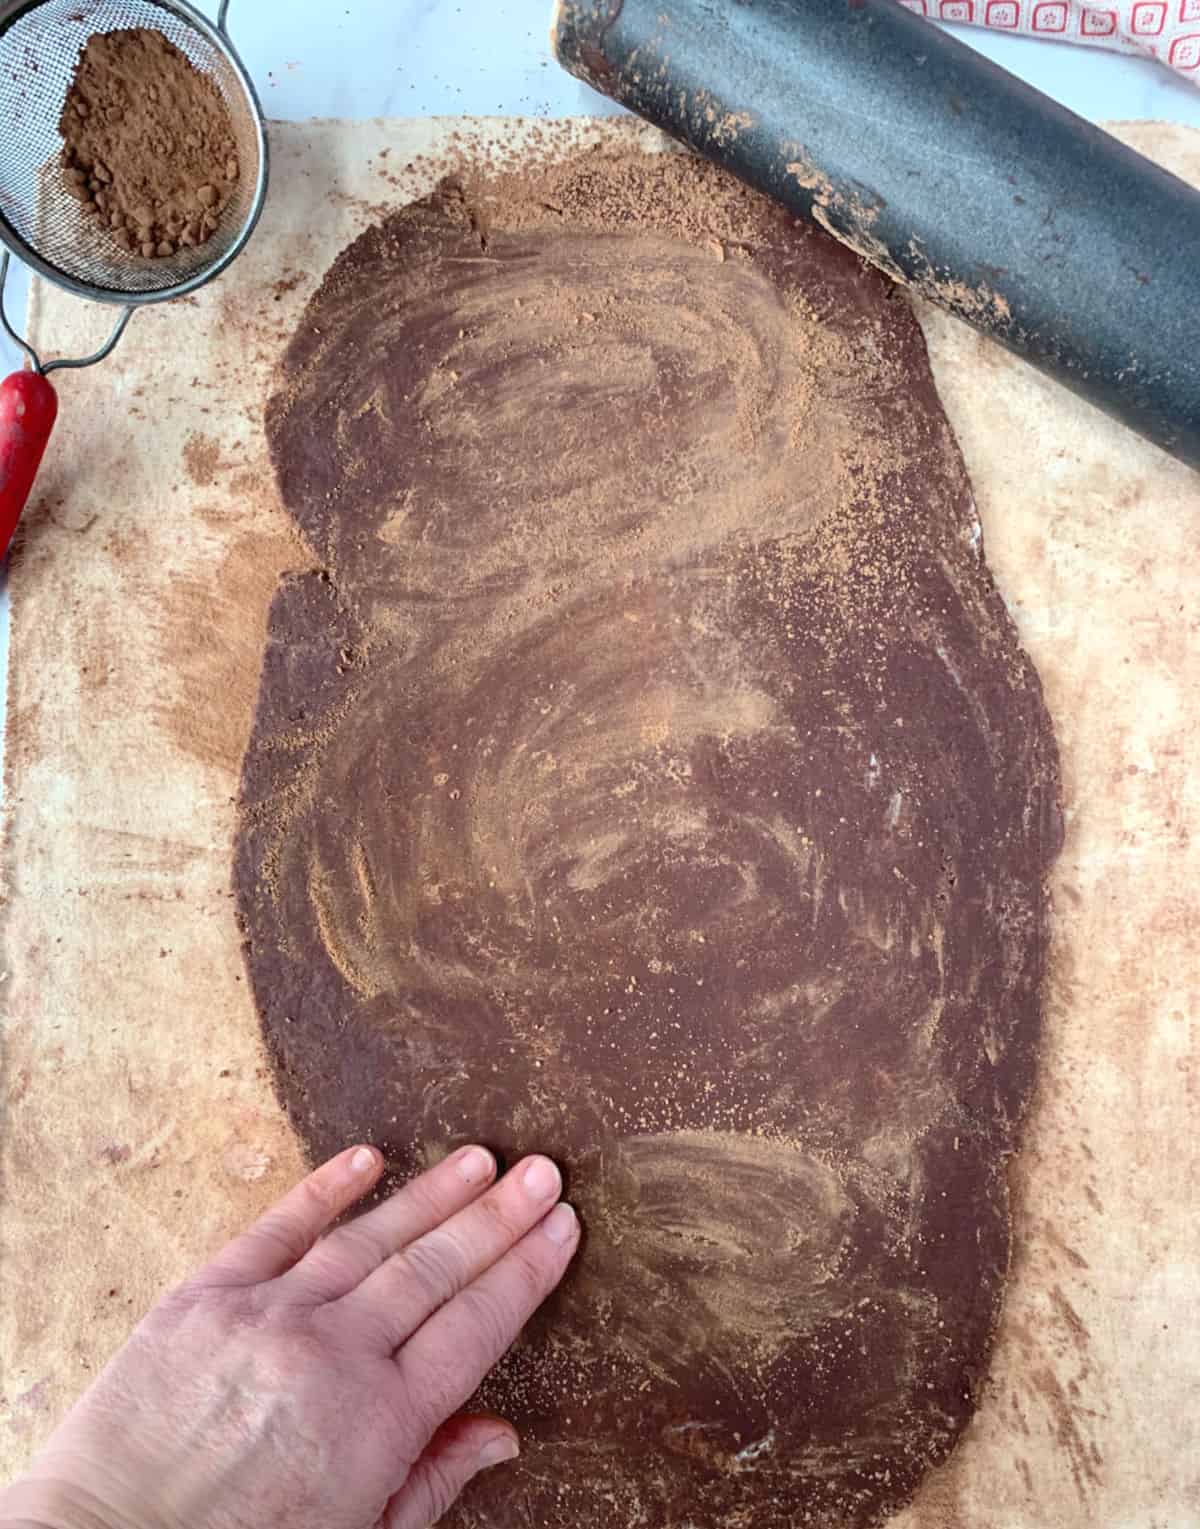 Rolled chocolate tart dough.